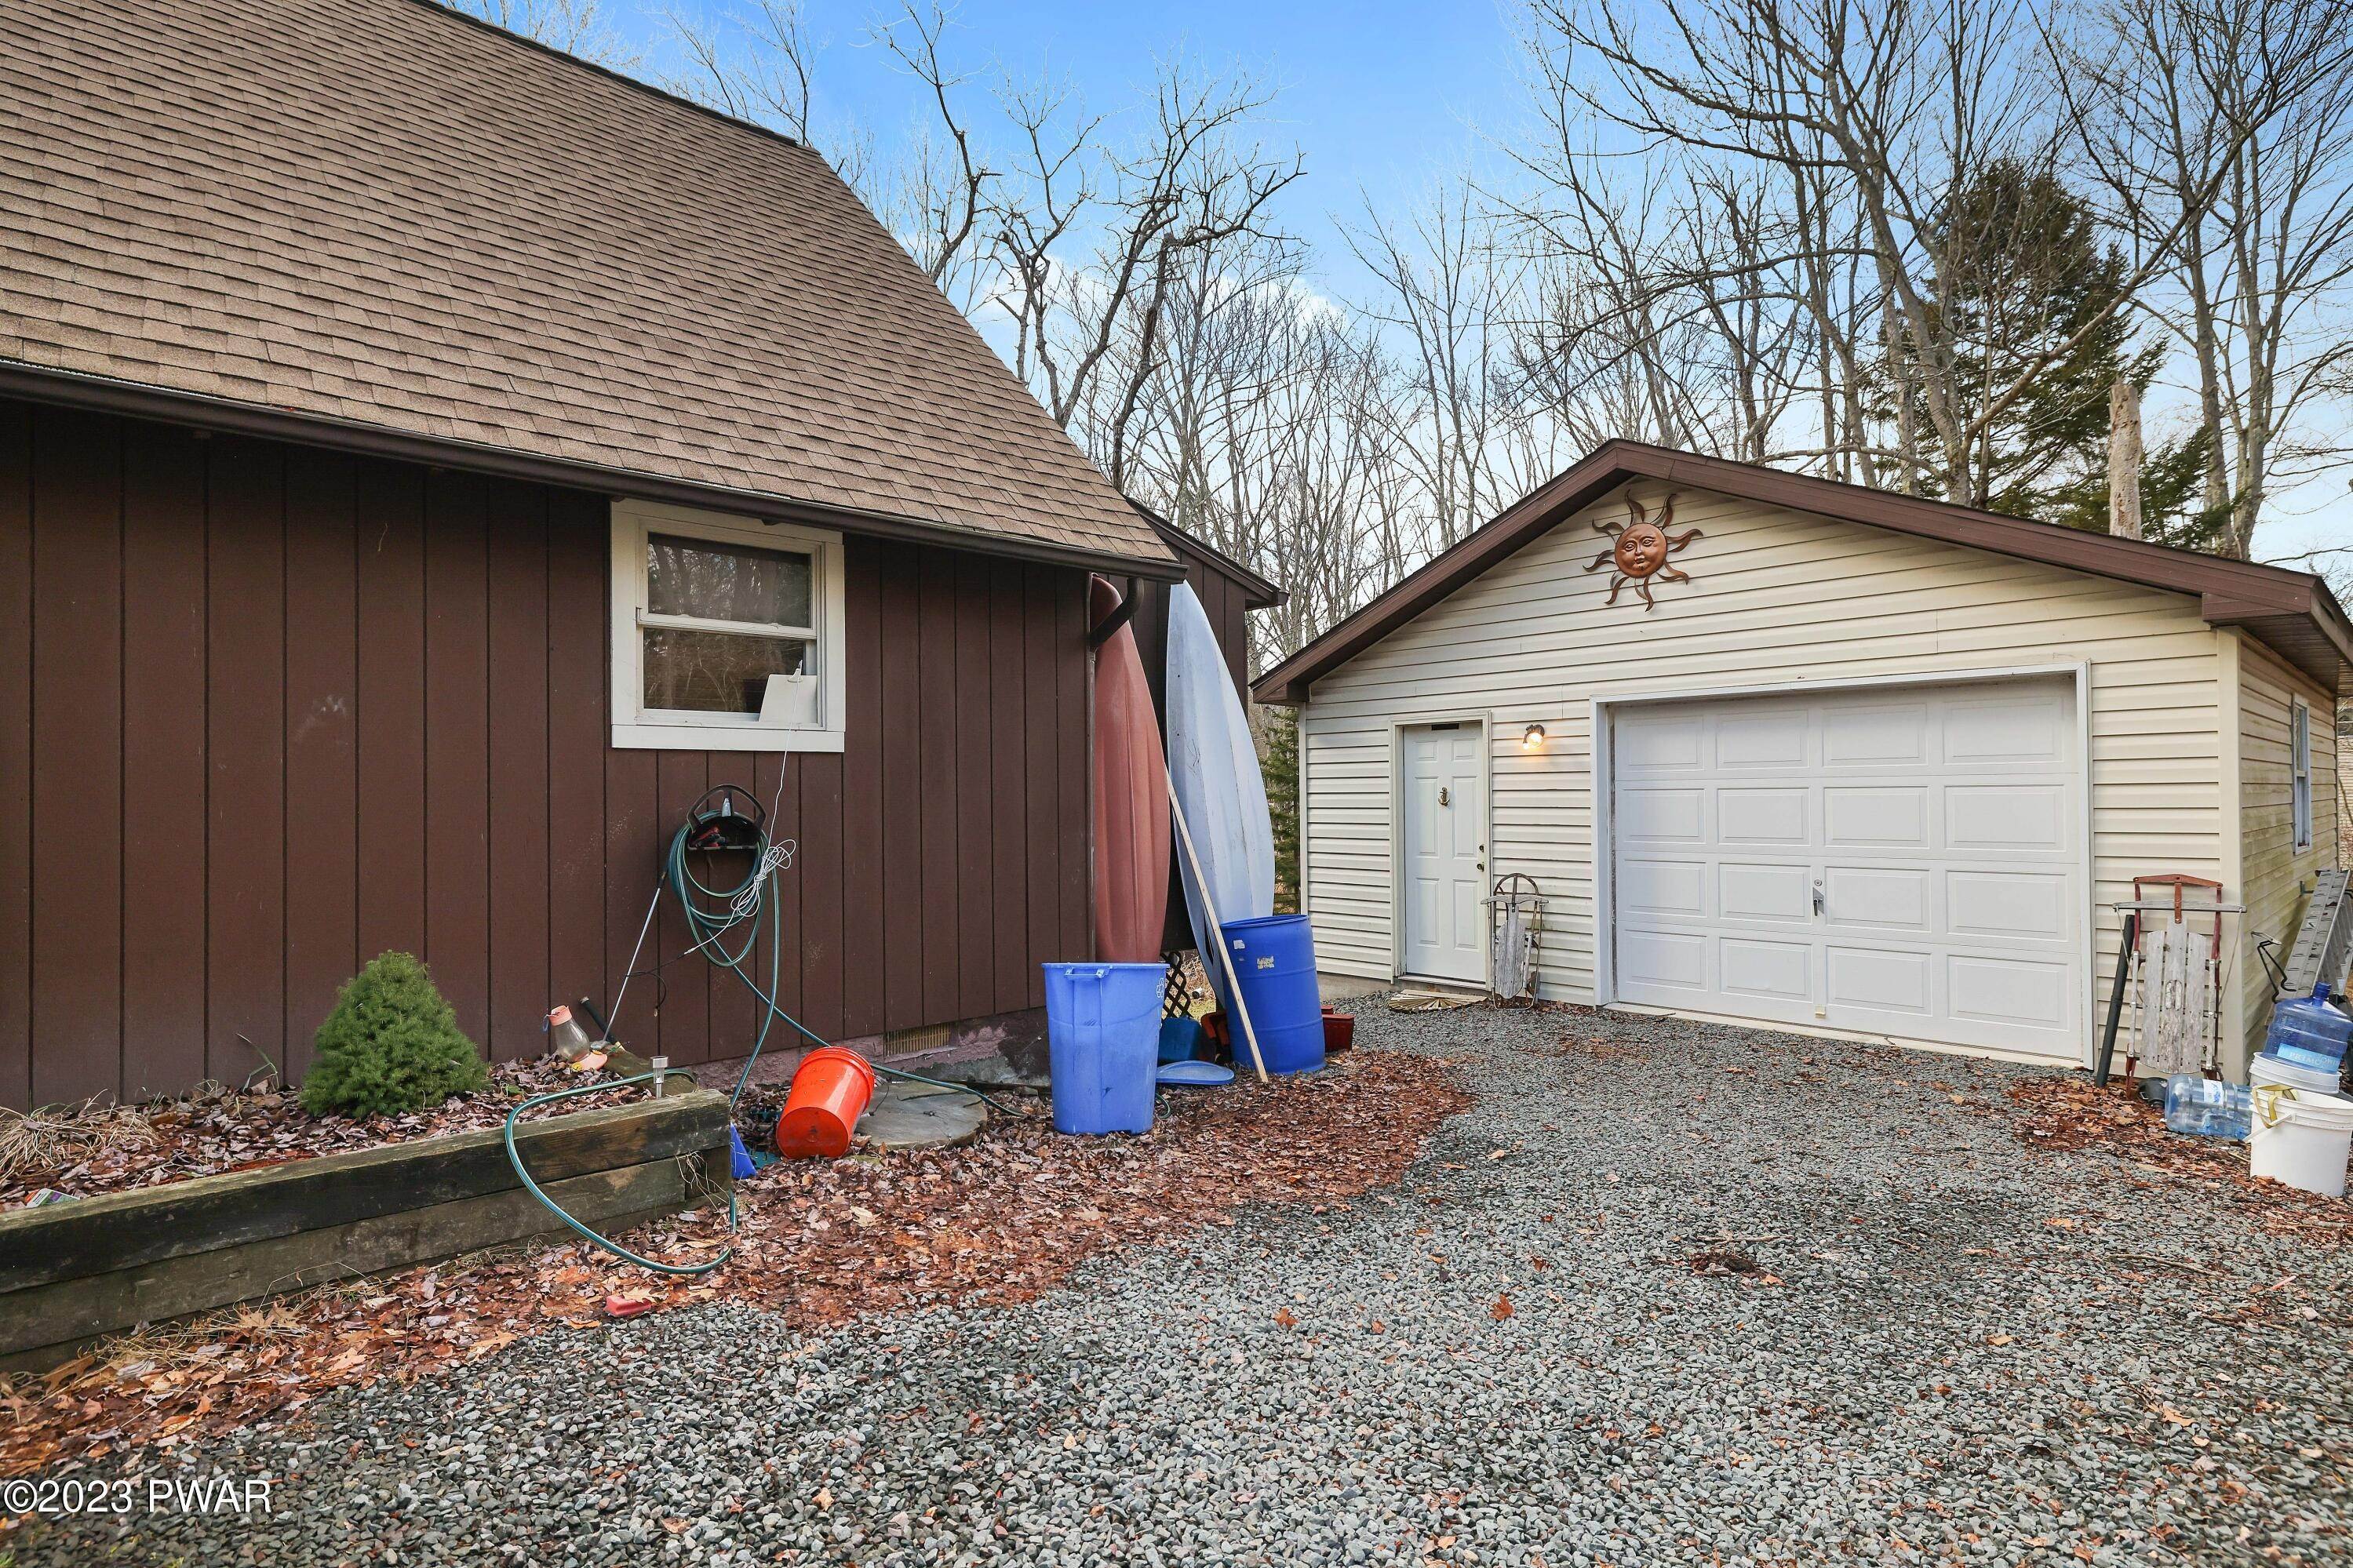 41. Single Family Homes for Sale at 528 Mineola Cir Pocono Lake, Pennsylvania 18347 United States